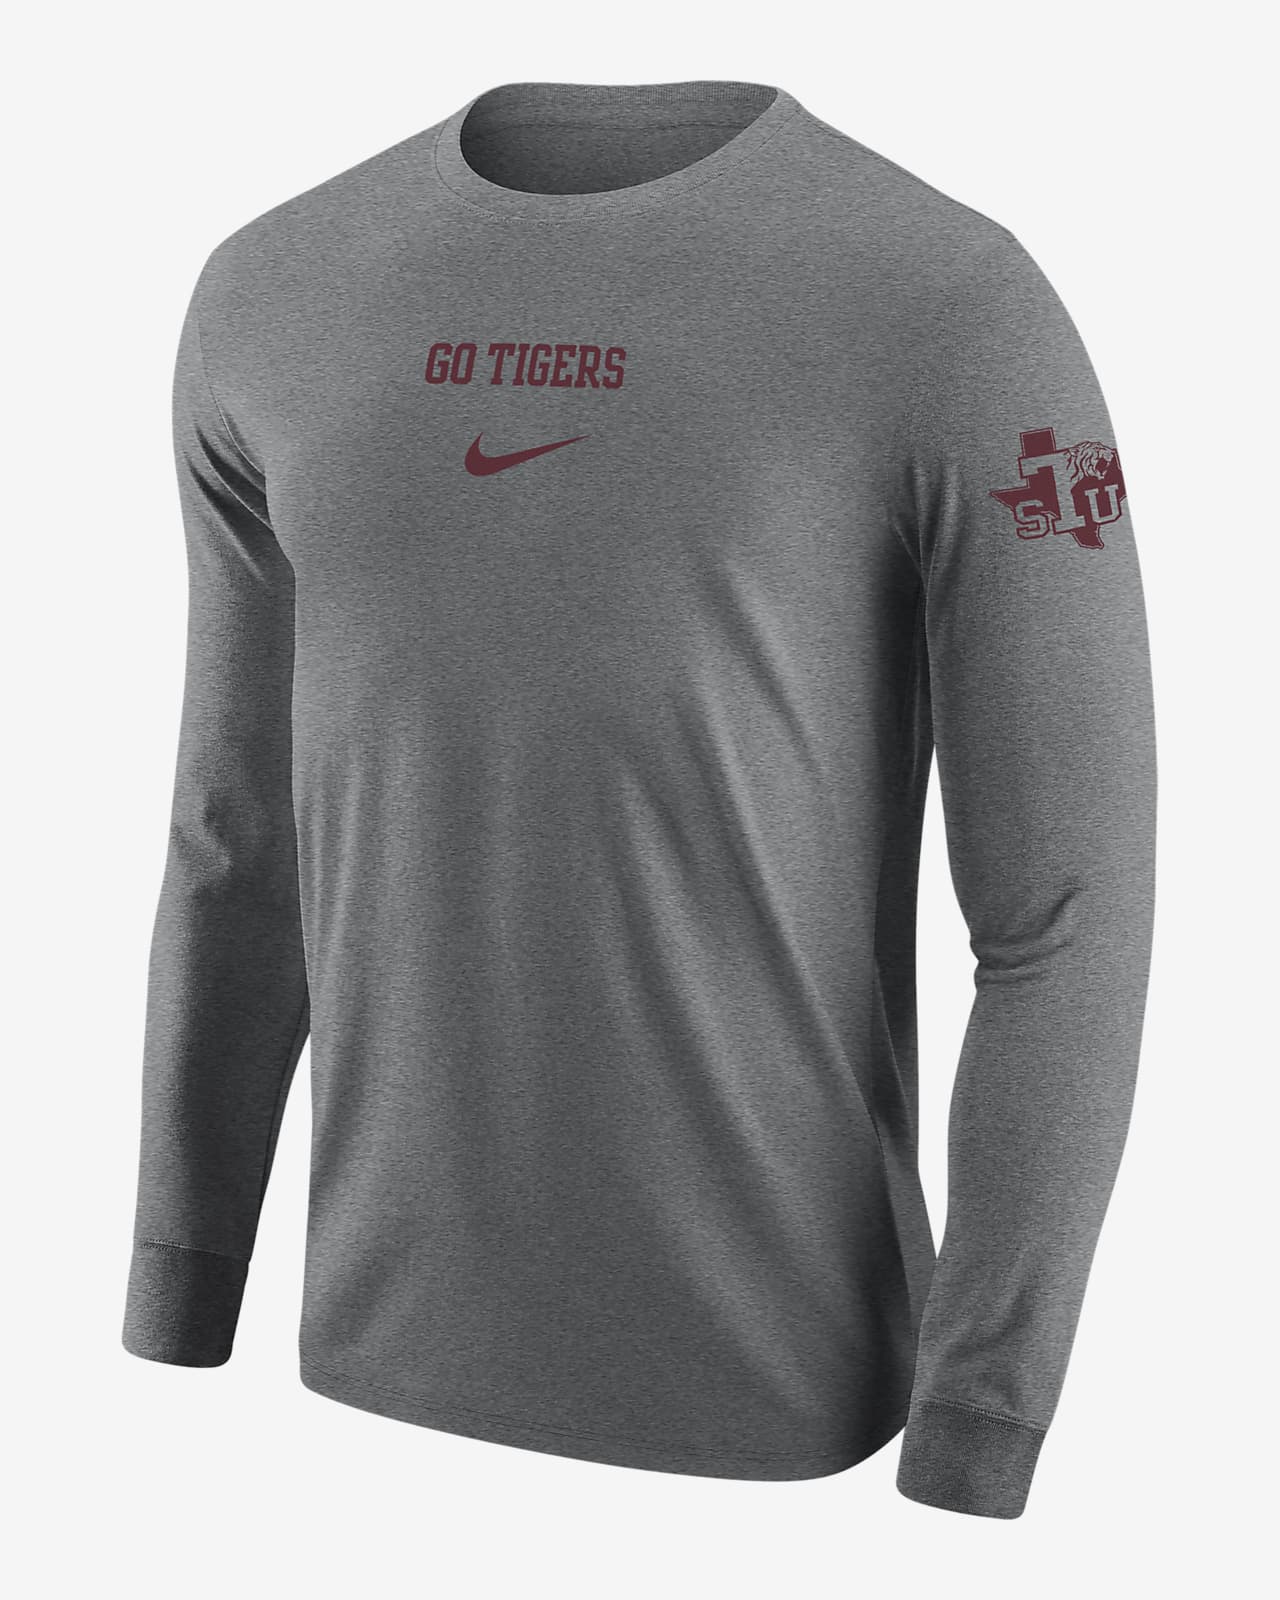 Texas Southern Men's Nike College Long-Sleeve T-Shirt